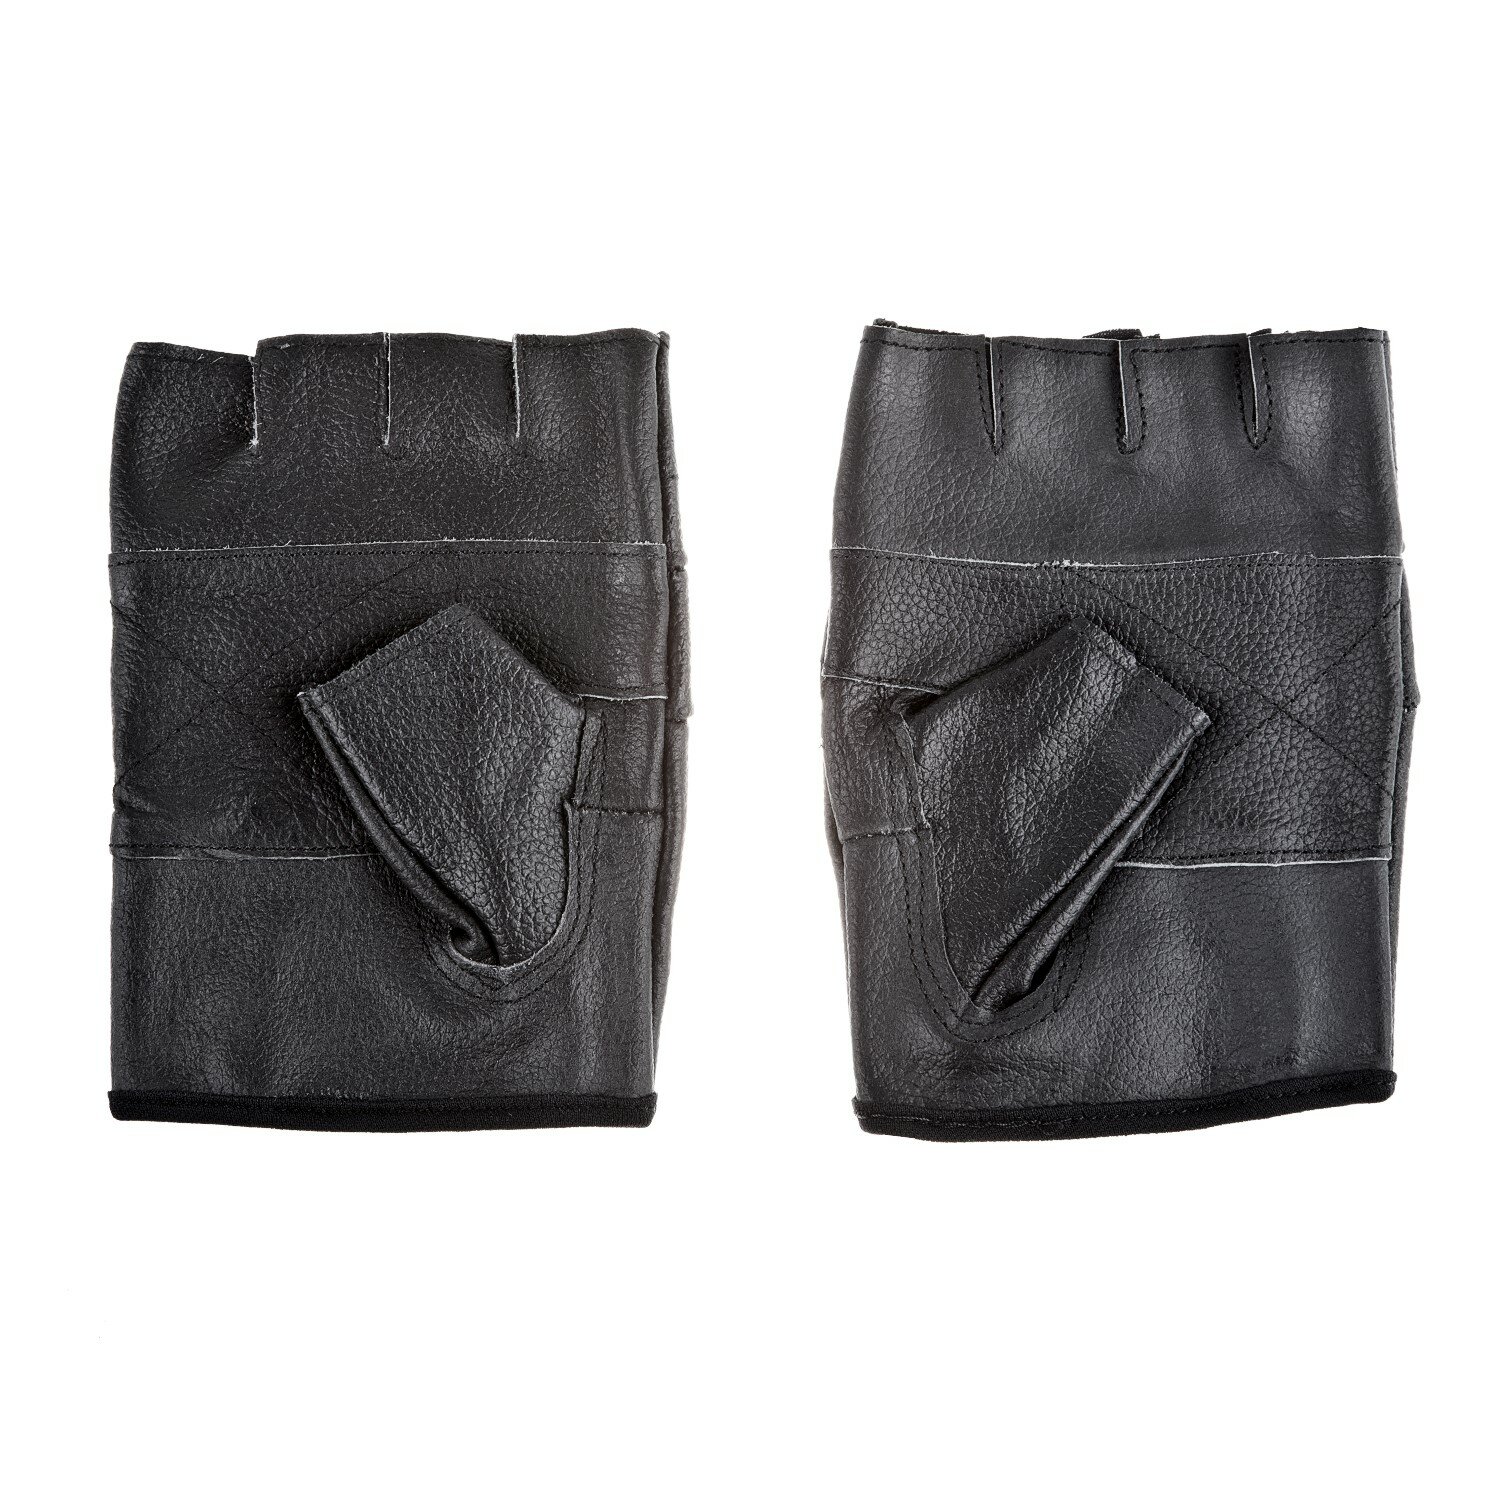 Перчатки Roomaif Rwg-100 (кожа) Black размер XL